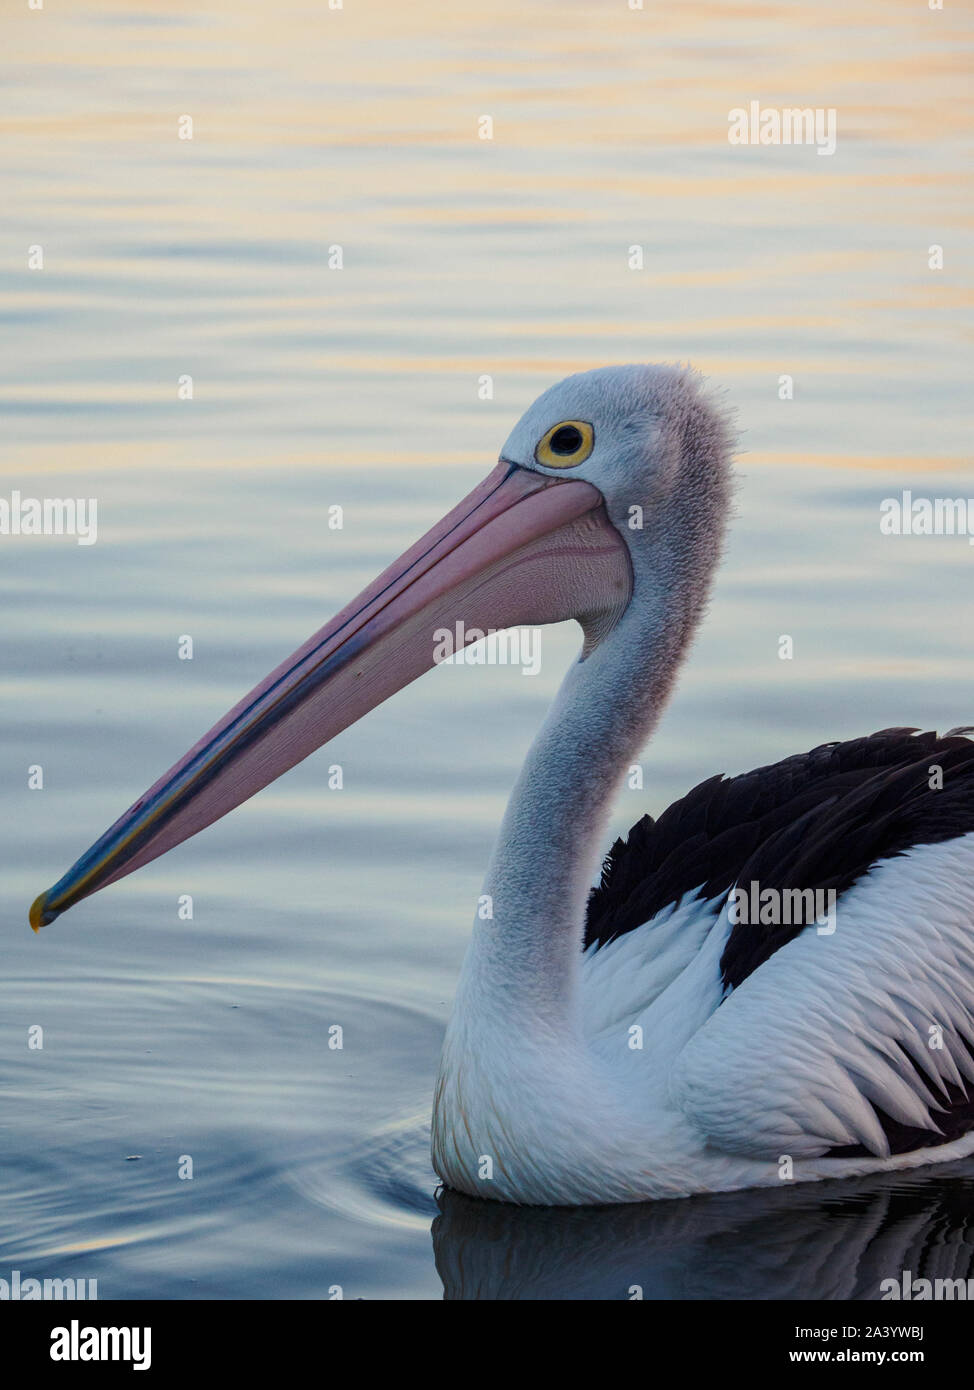 Pelican on sea at sunset Stock Photo